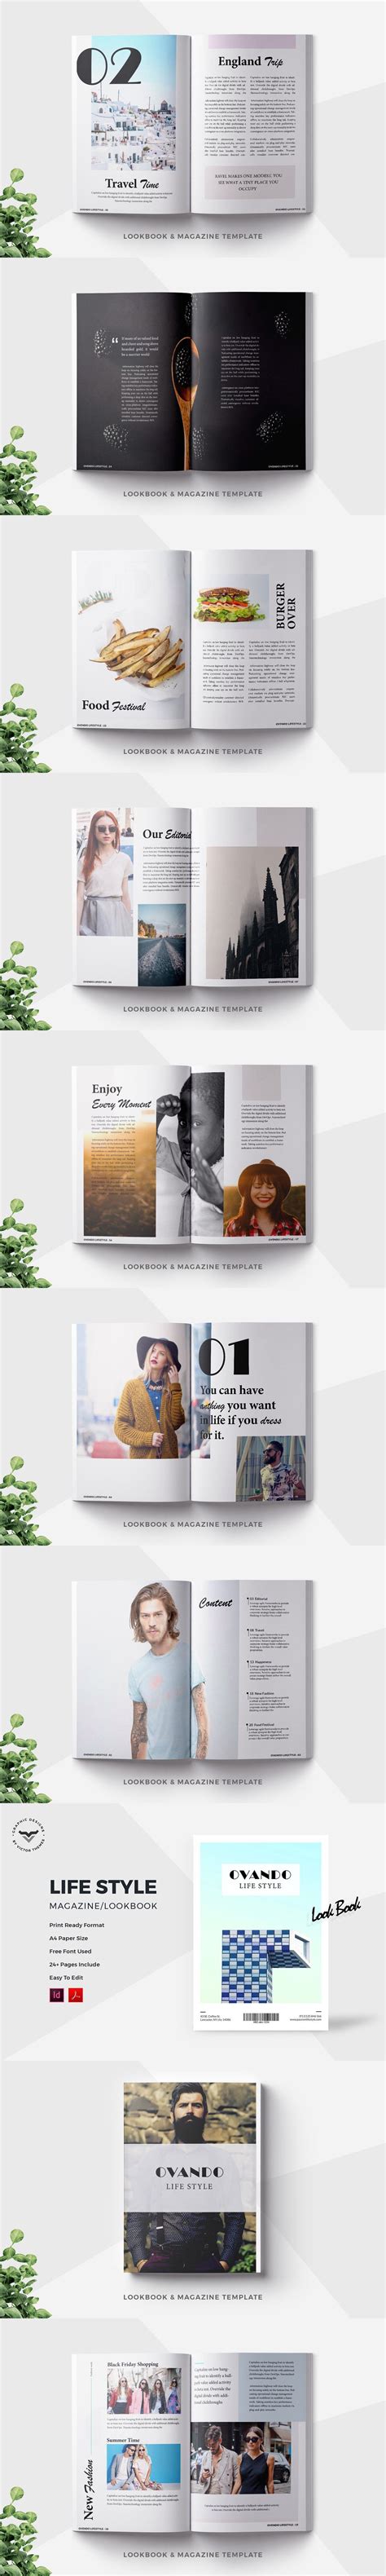 Lifestyle Magazine Lookbook Template | Magazine design, Magazine template, Magazine